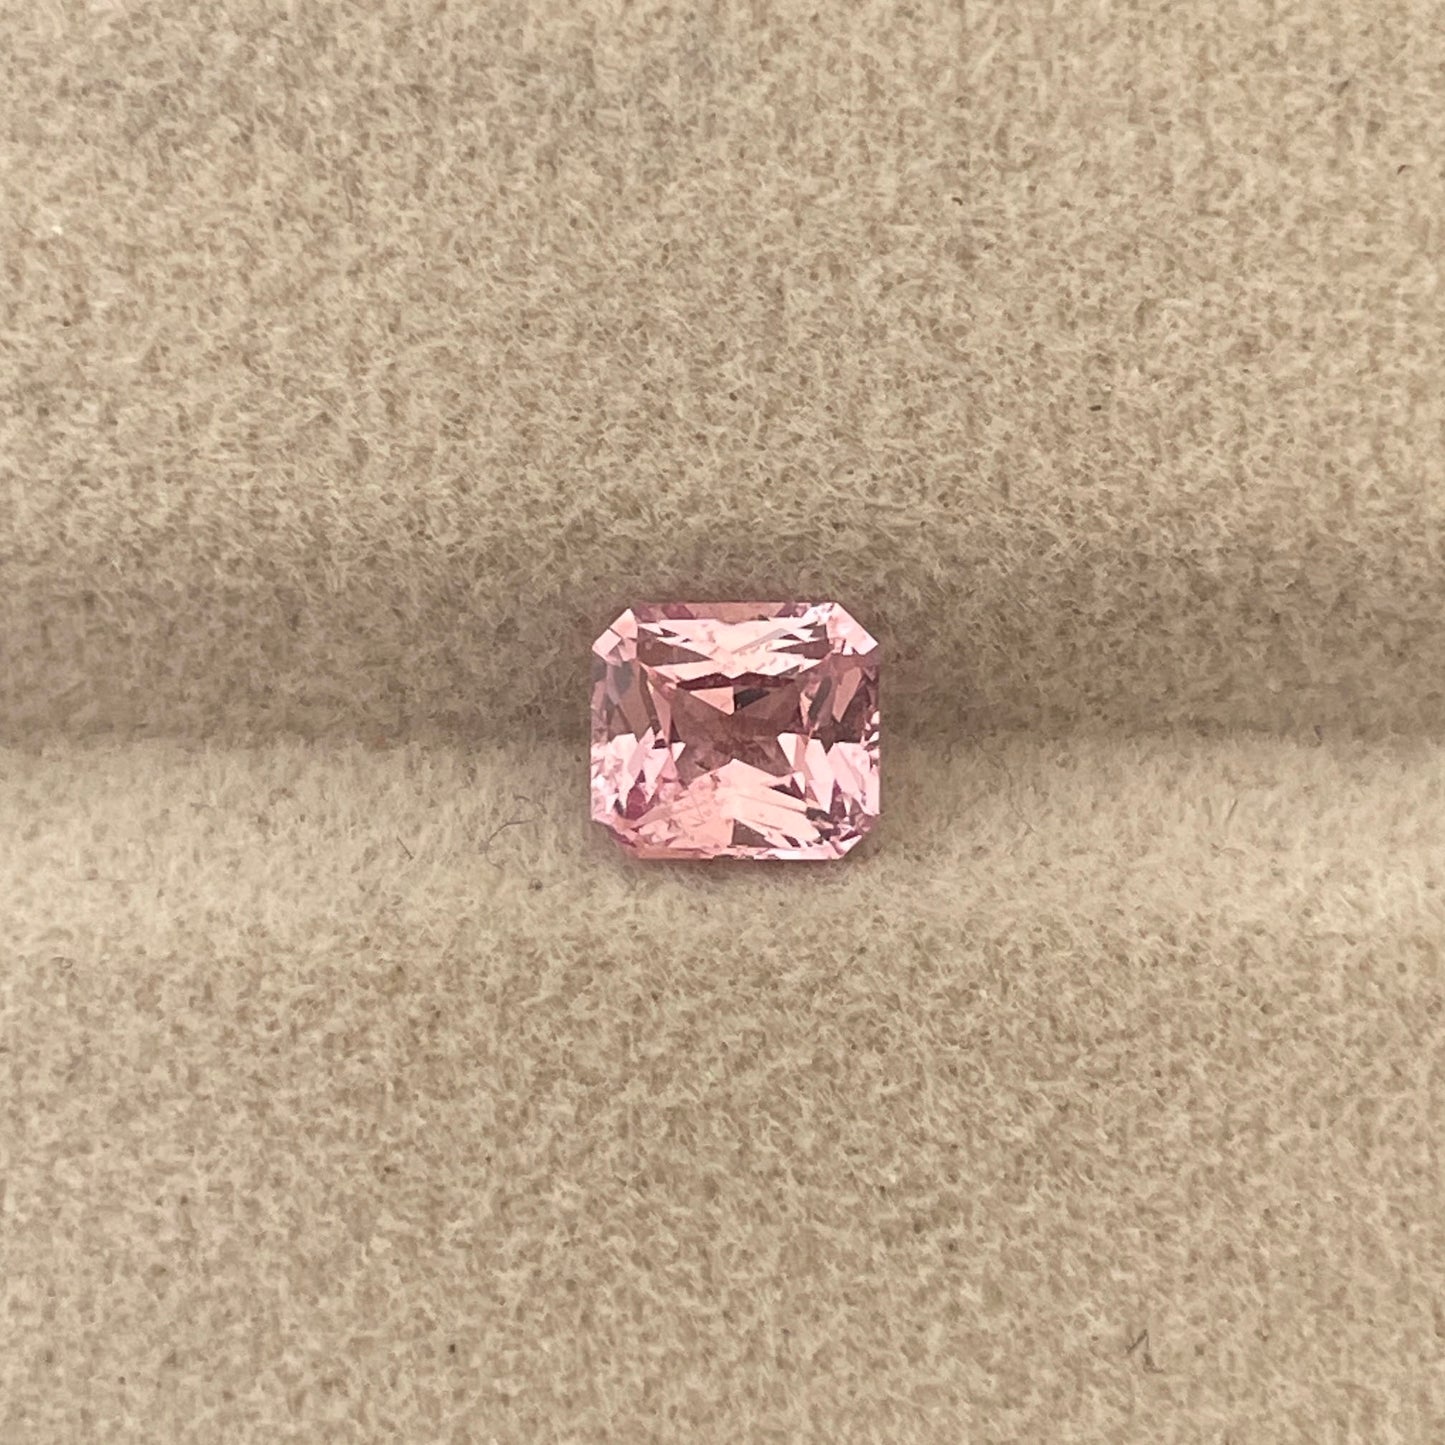 1.15 Carat Pink Sapphire